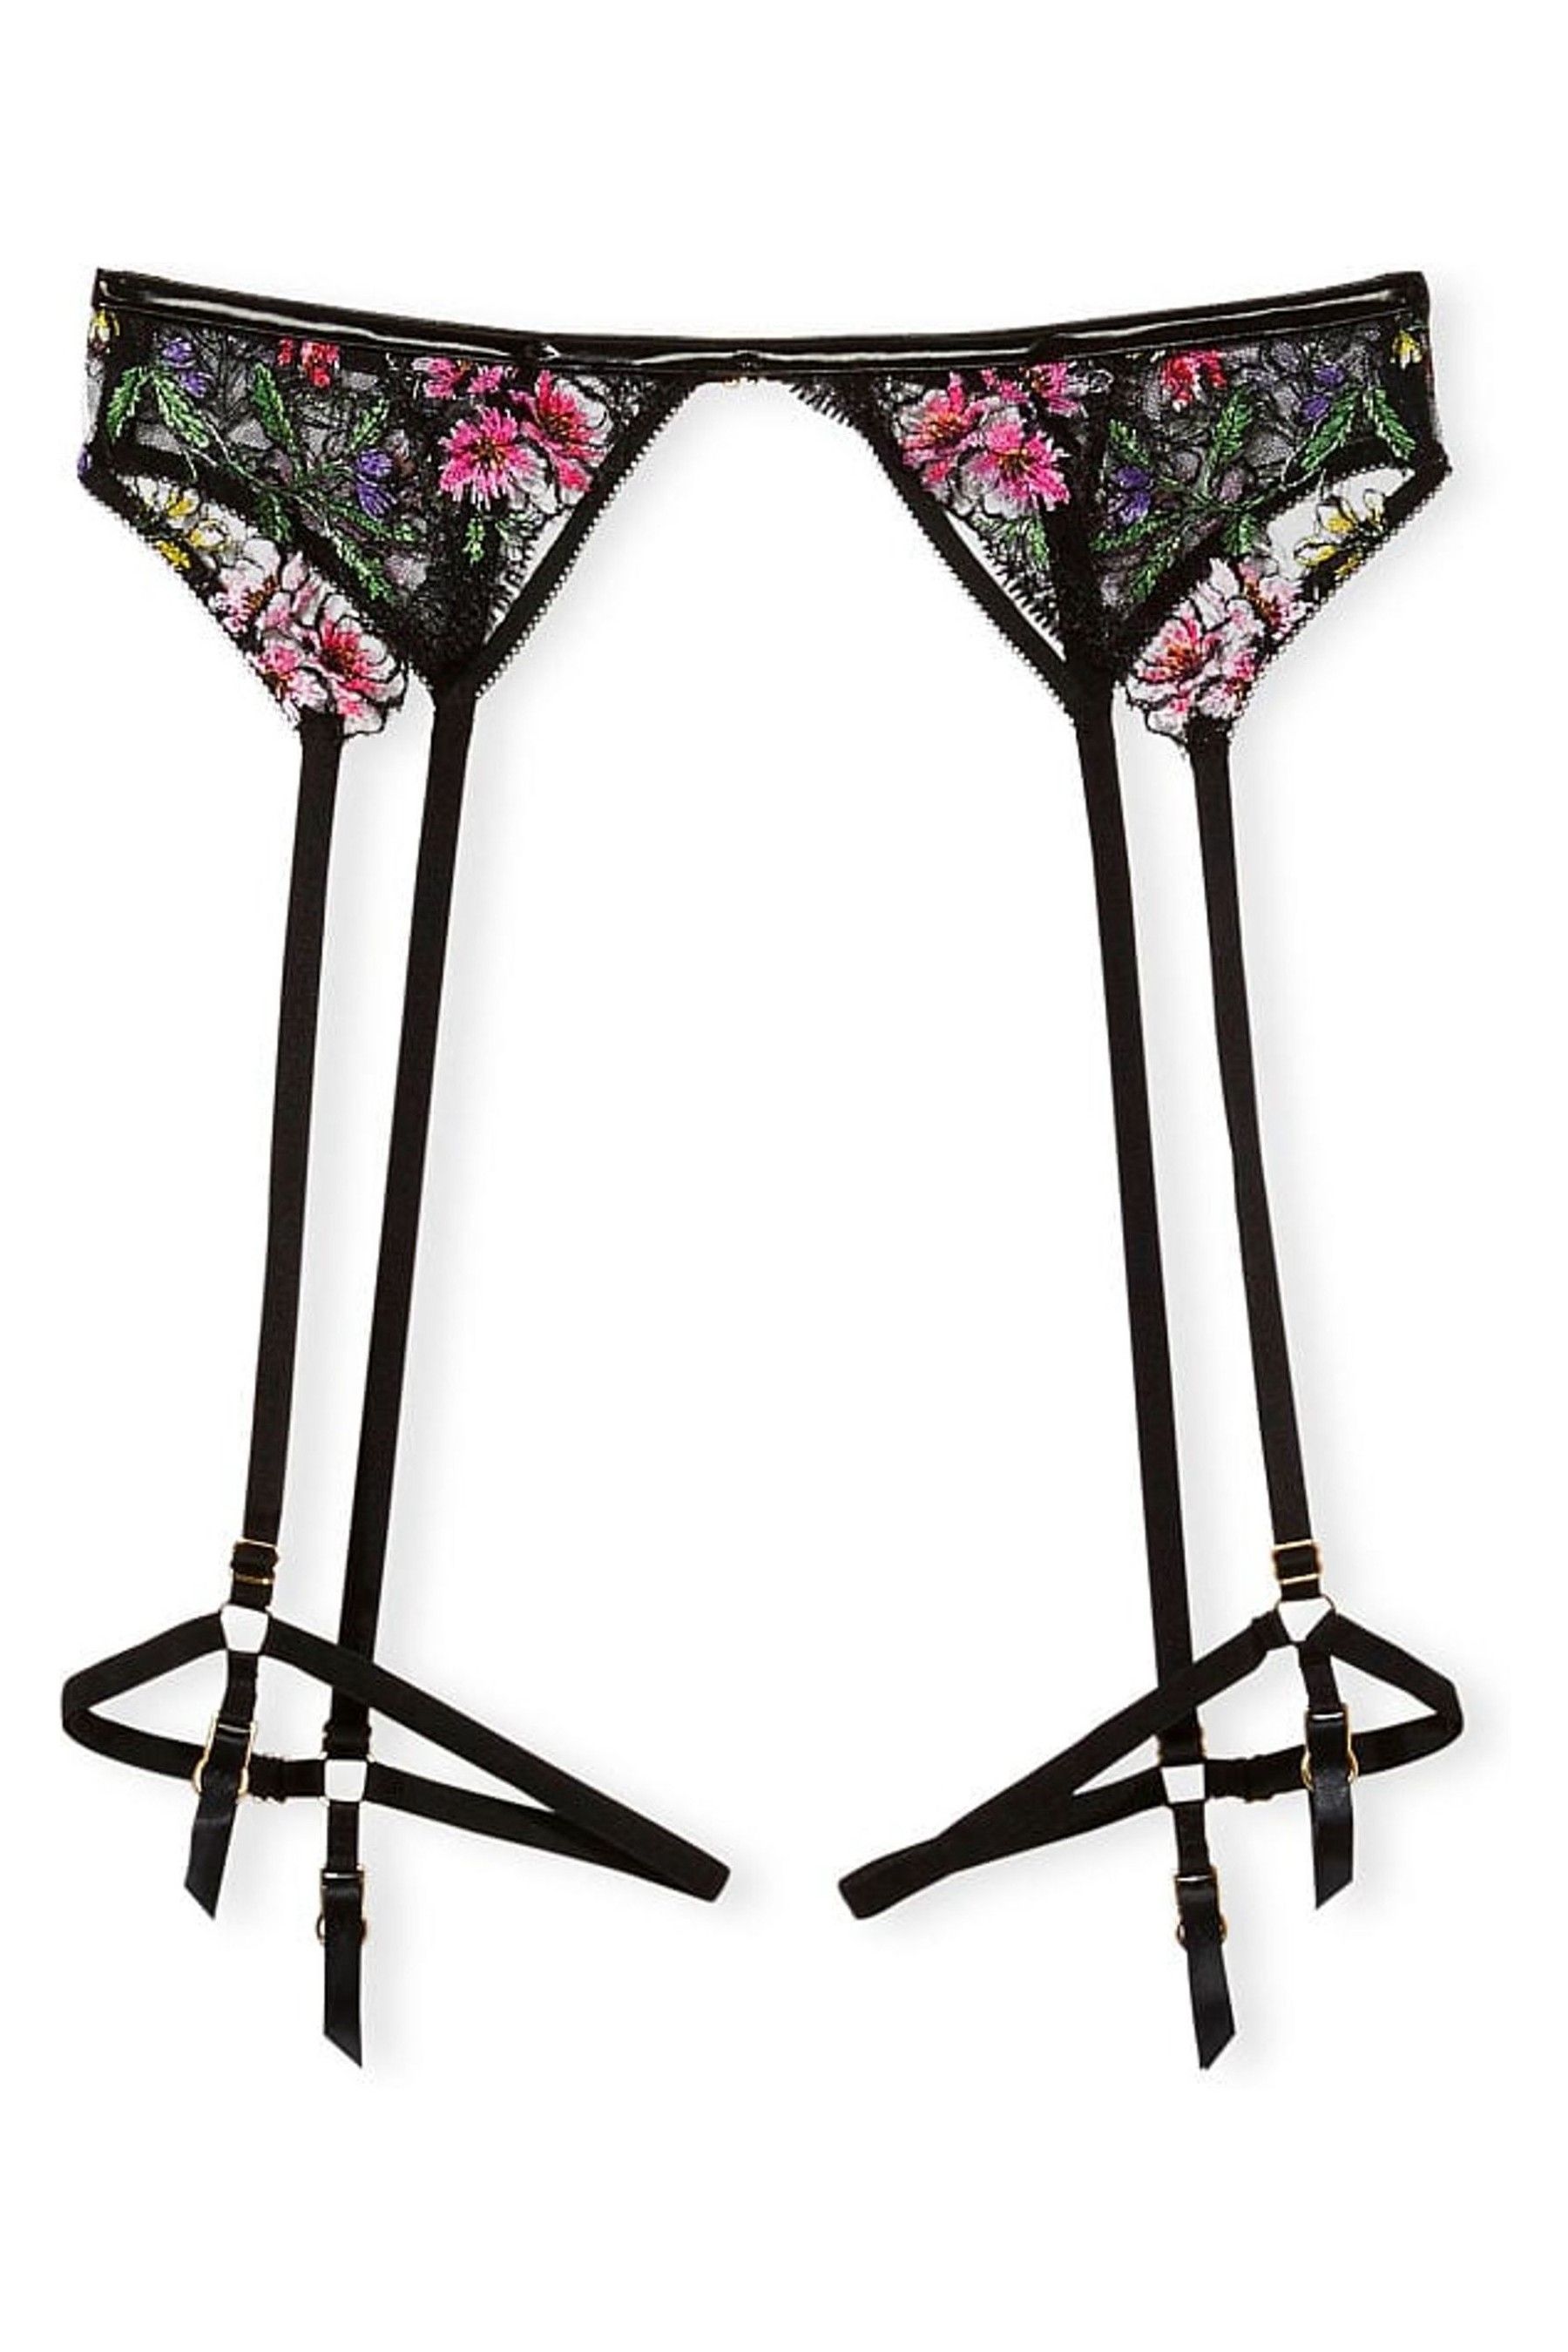 Buy Victoria's Secret Floral Embroidered Garter Belt from the Victoria ...